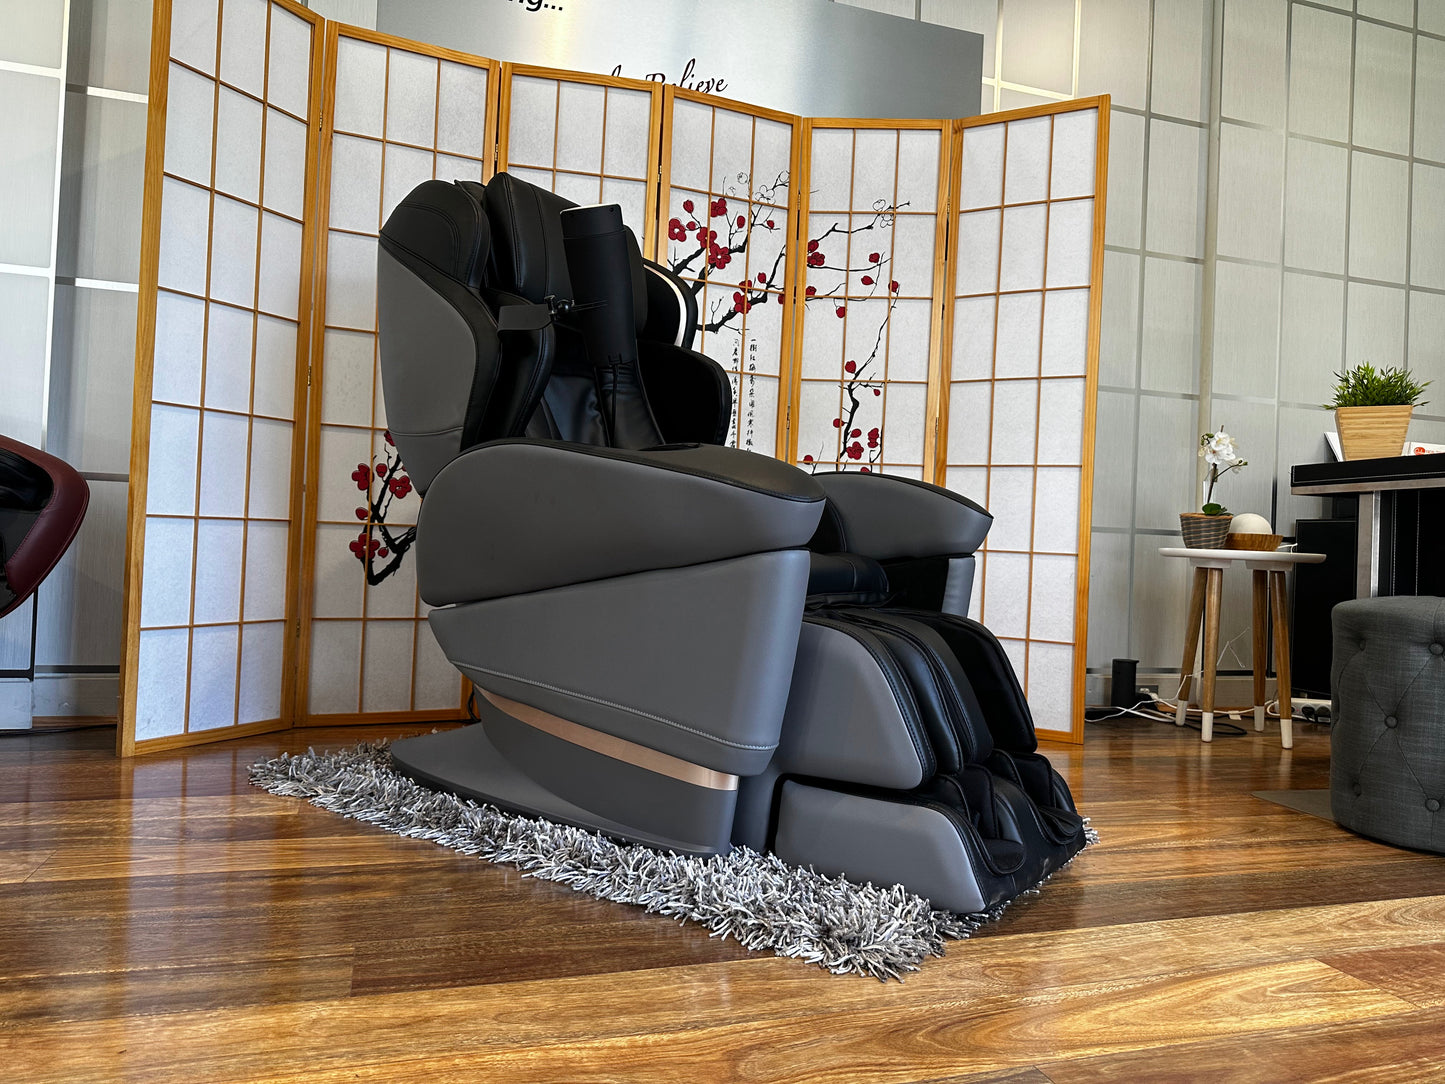 Fujiiryoki JP3000 Medical Massage Chair